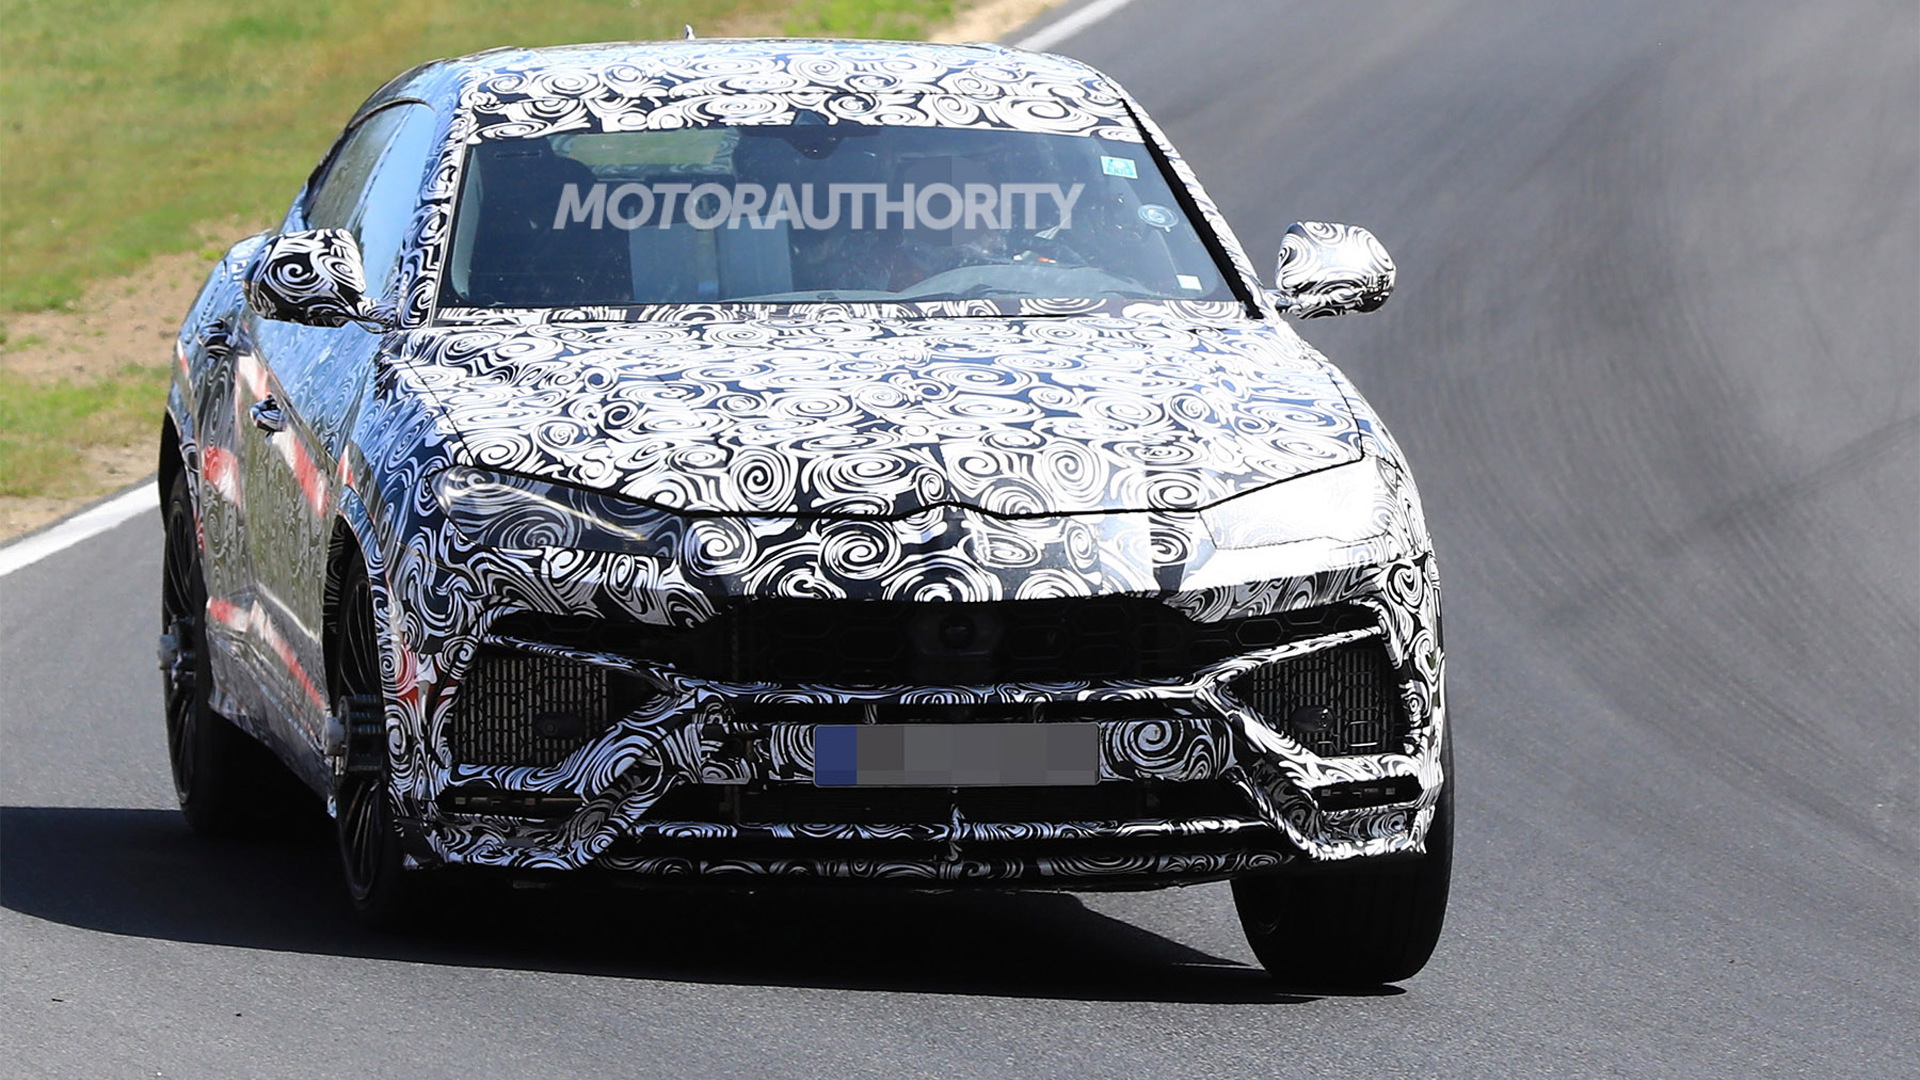 2019 Lamborghini Urus spy shots - Image via S. Baldauf/SB-Medien